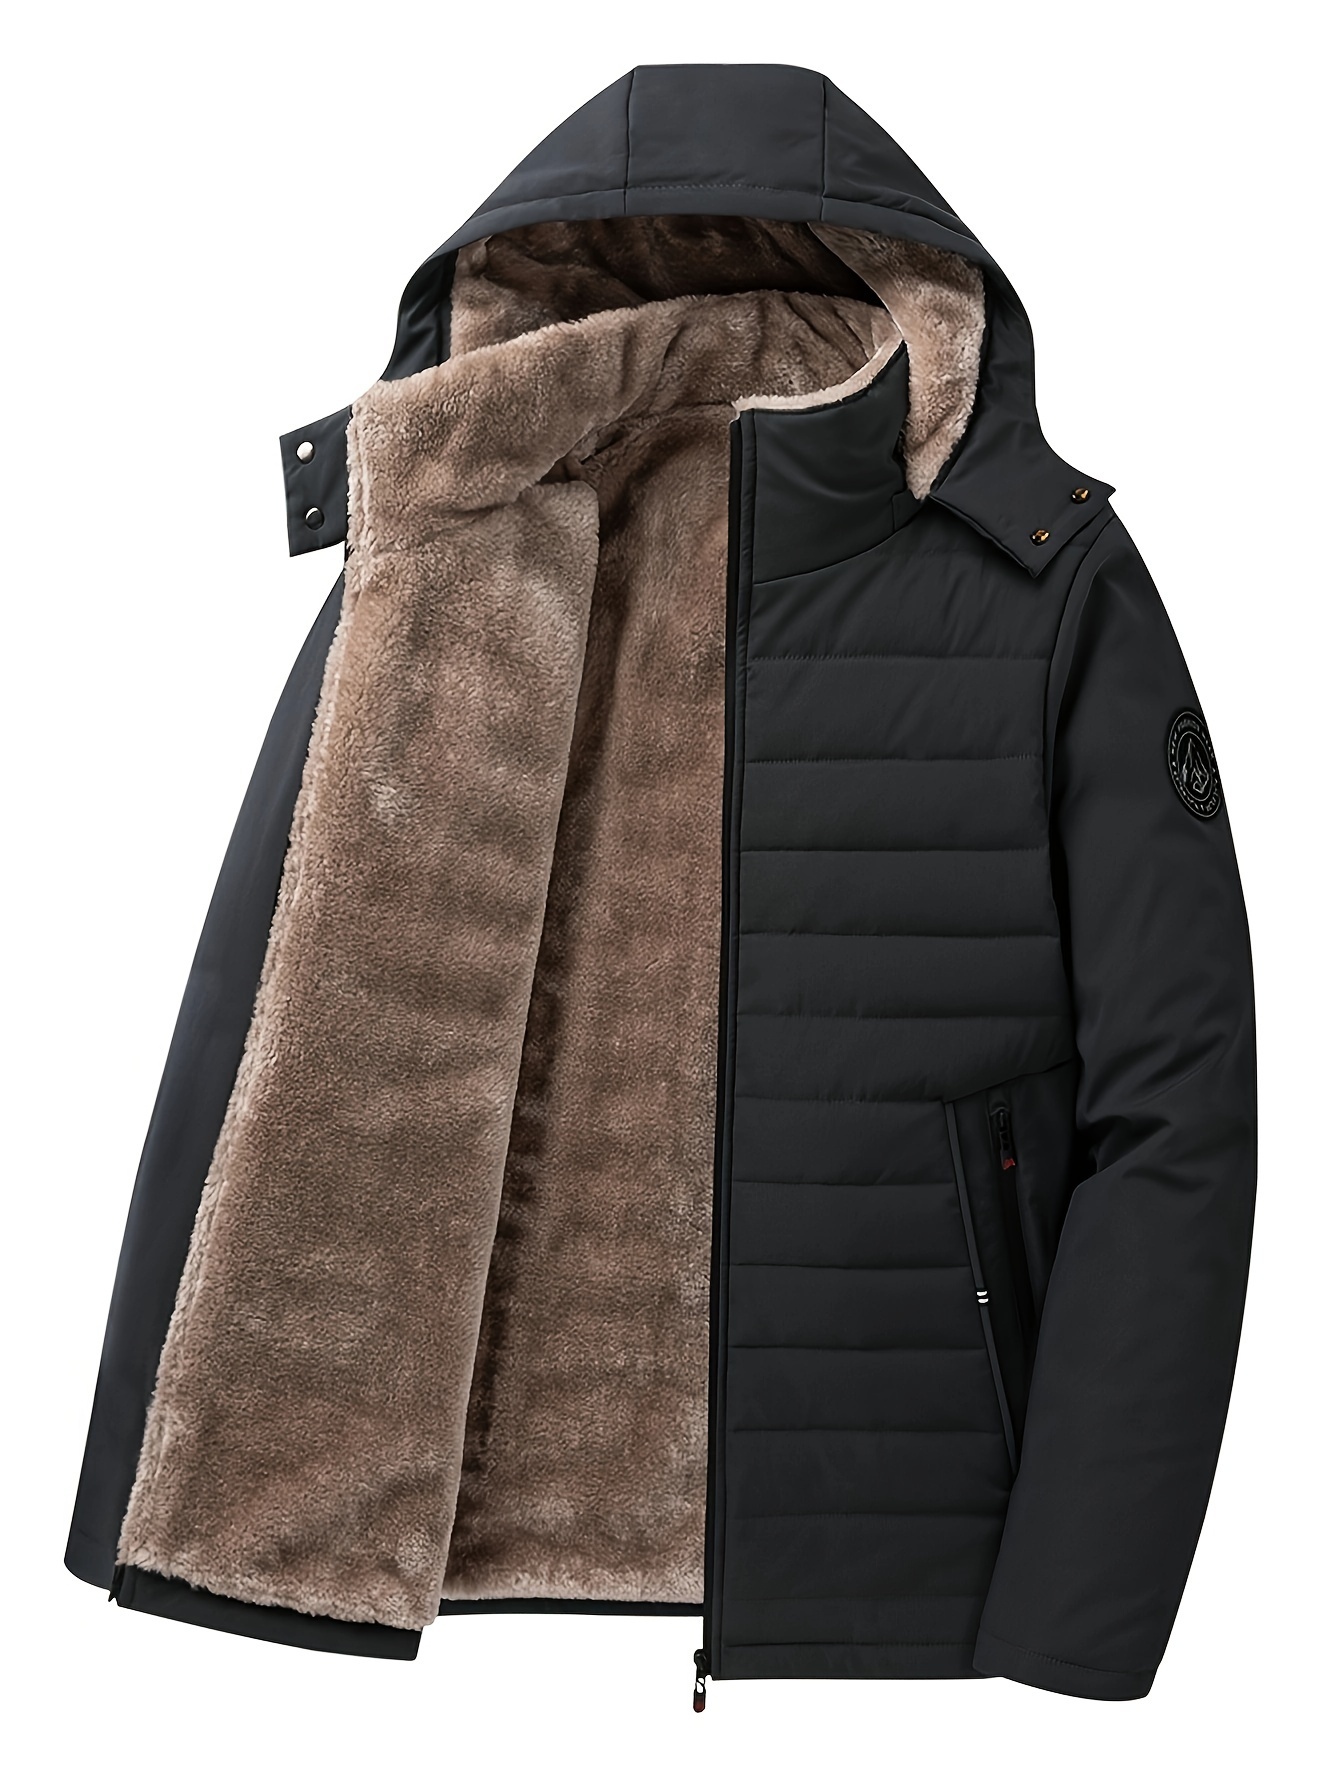 Comprar Acogedor chaleco de plumas para hombre, chaqueta cálida, chaquetas  sin mangas, chaleco grueso para hombre, abrigo cálido para exteriores para  hombre, Otoño Invierno